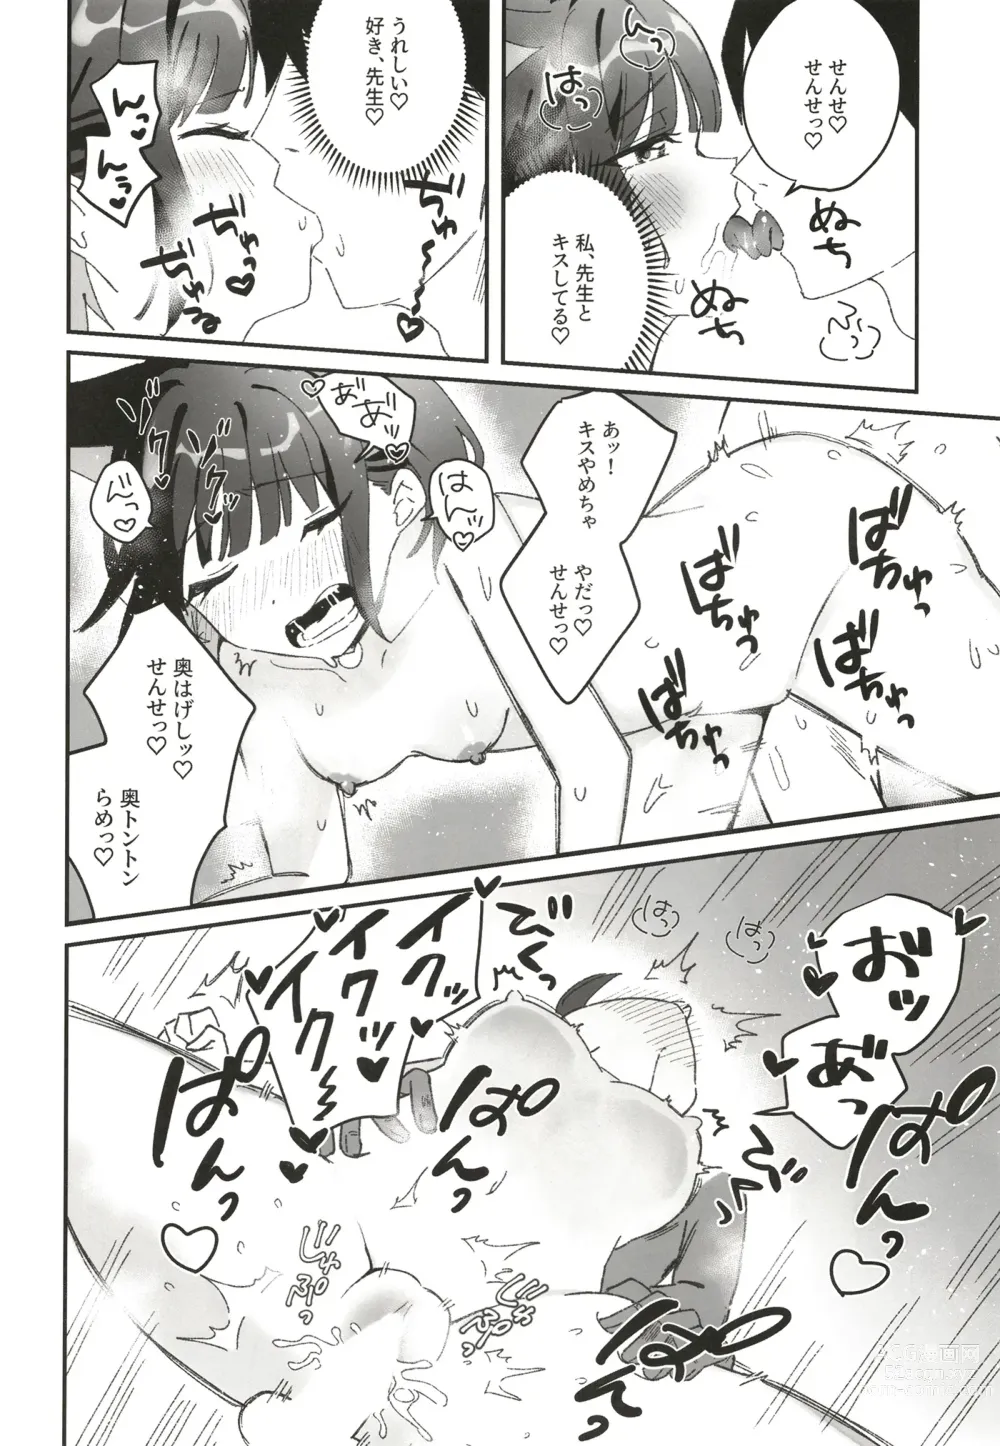 Page 23 of doujinshi Reward Me